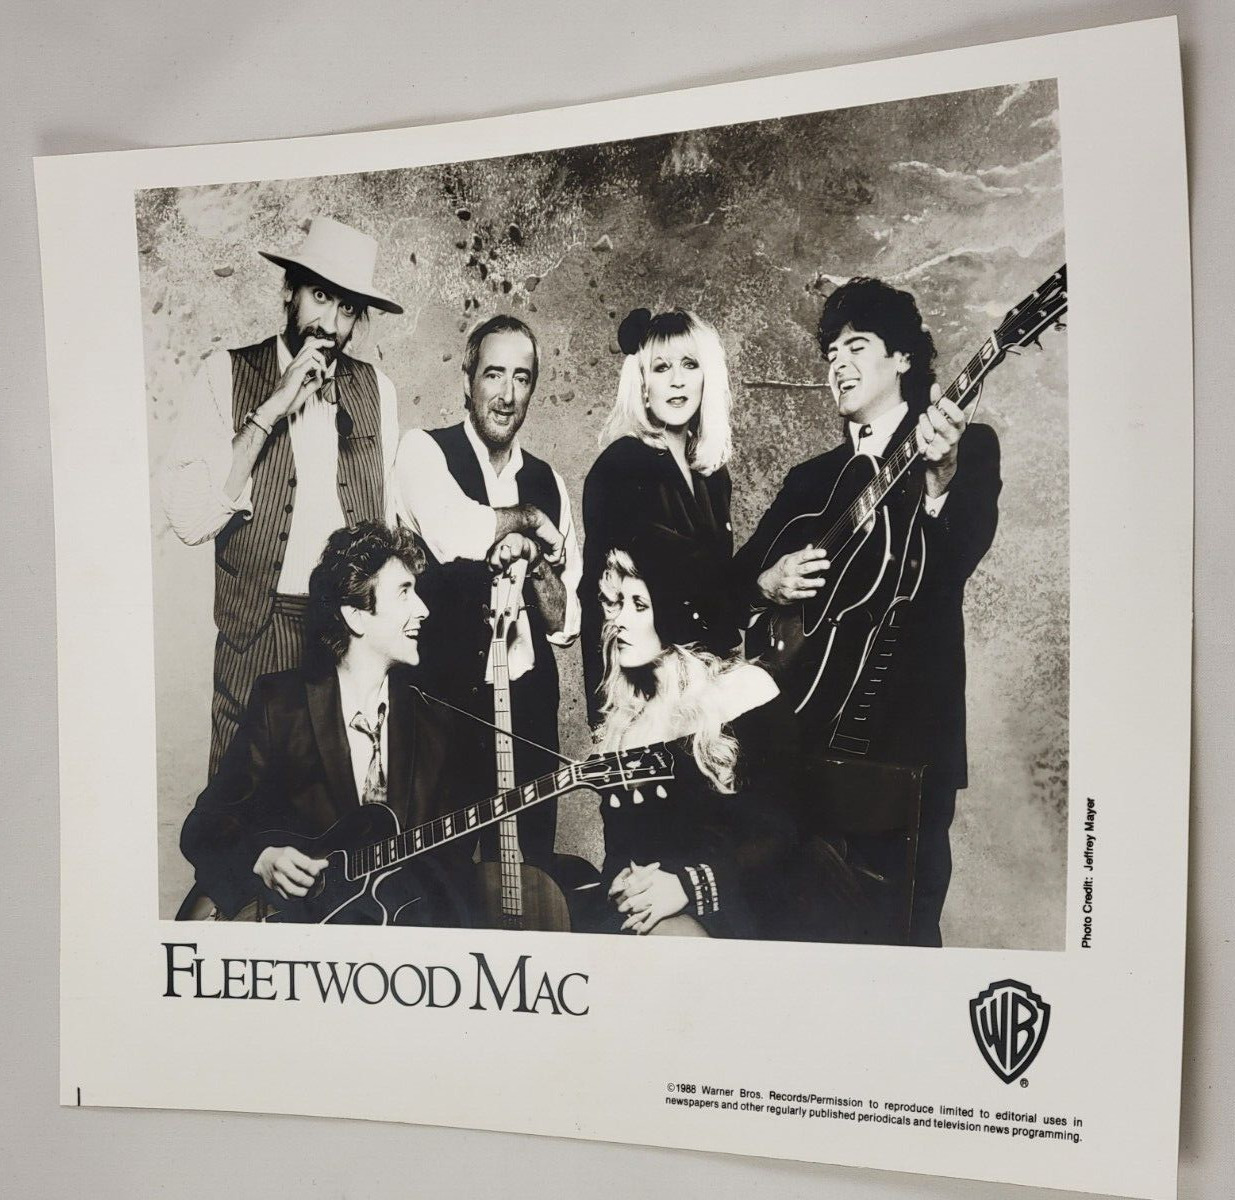 1988 Fleetwood Mac Warner Bros Records Media Press Kit Promo Photo Greatest Hits